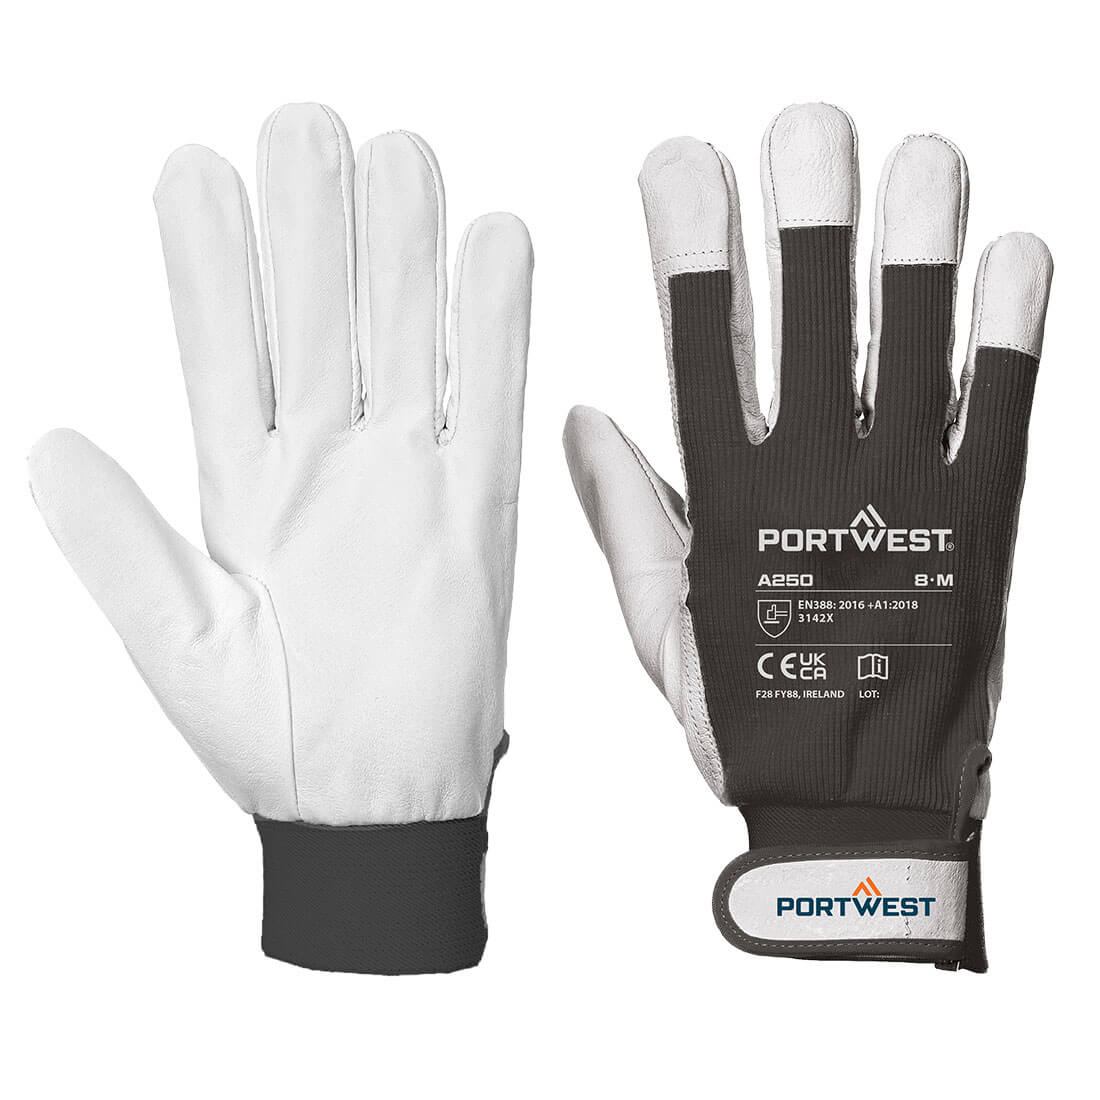 Portwest Tergsus Glove (A250)